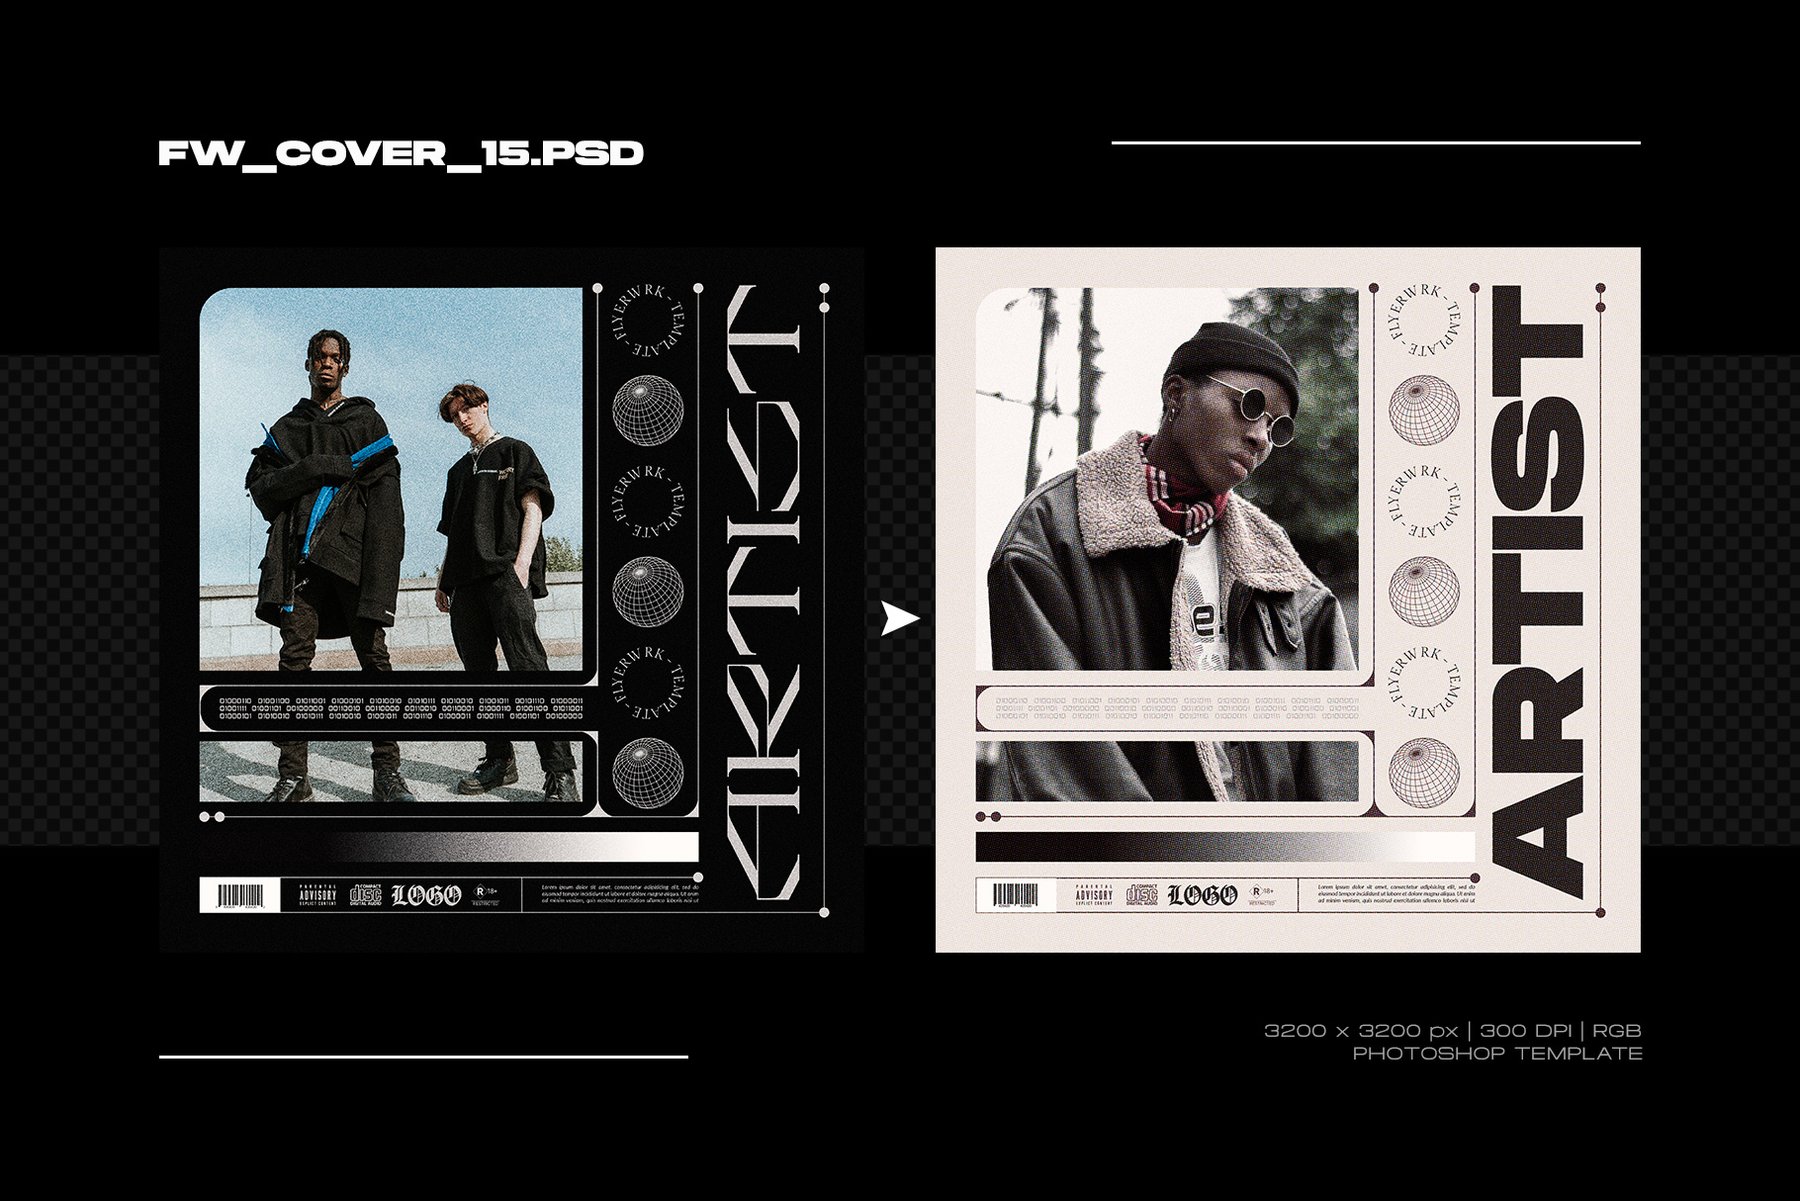 Flyerwrk 嘻哈说唱高级创意大胆艺术魅力封面设计Photoshop模板 COVER DESIGNS VOL.03 图标素材 第6张